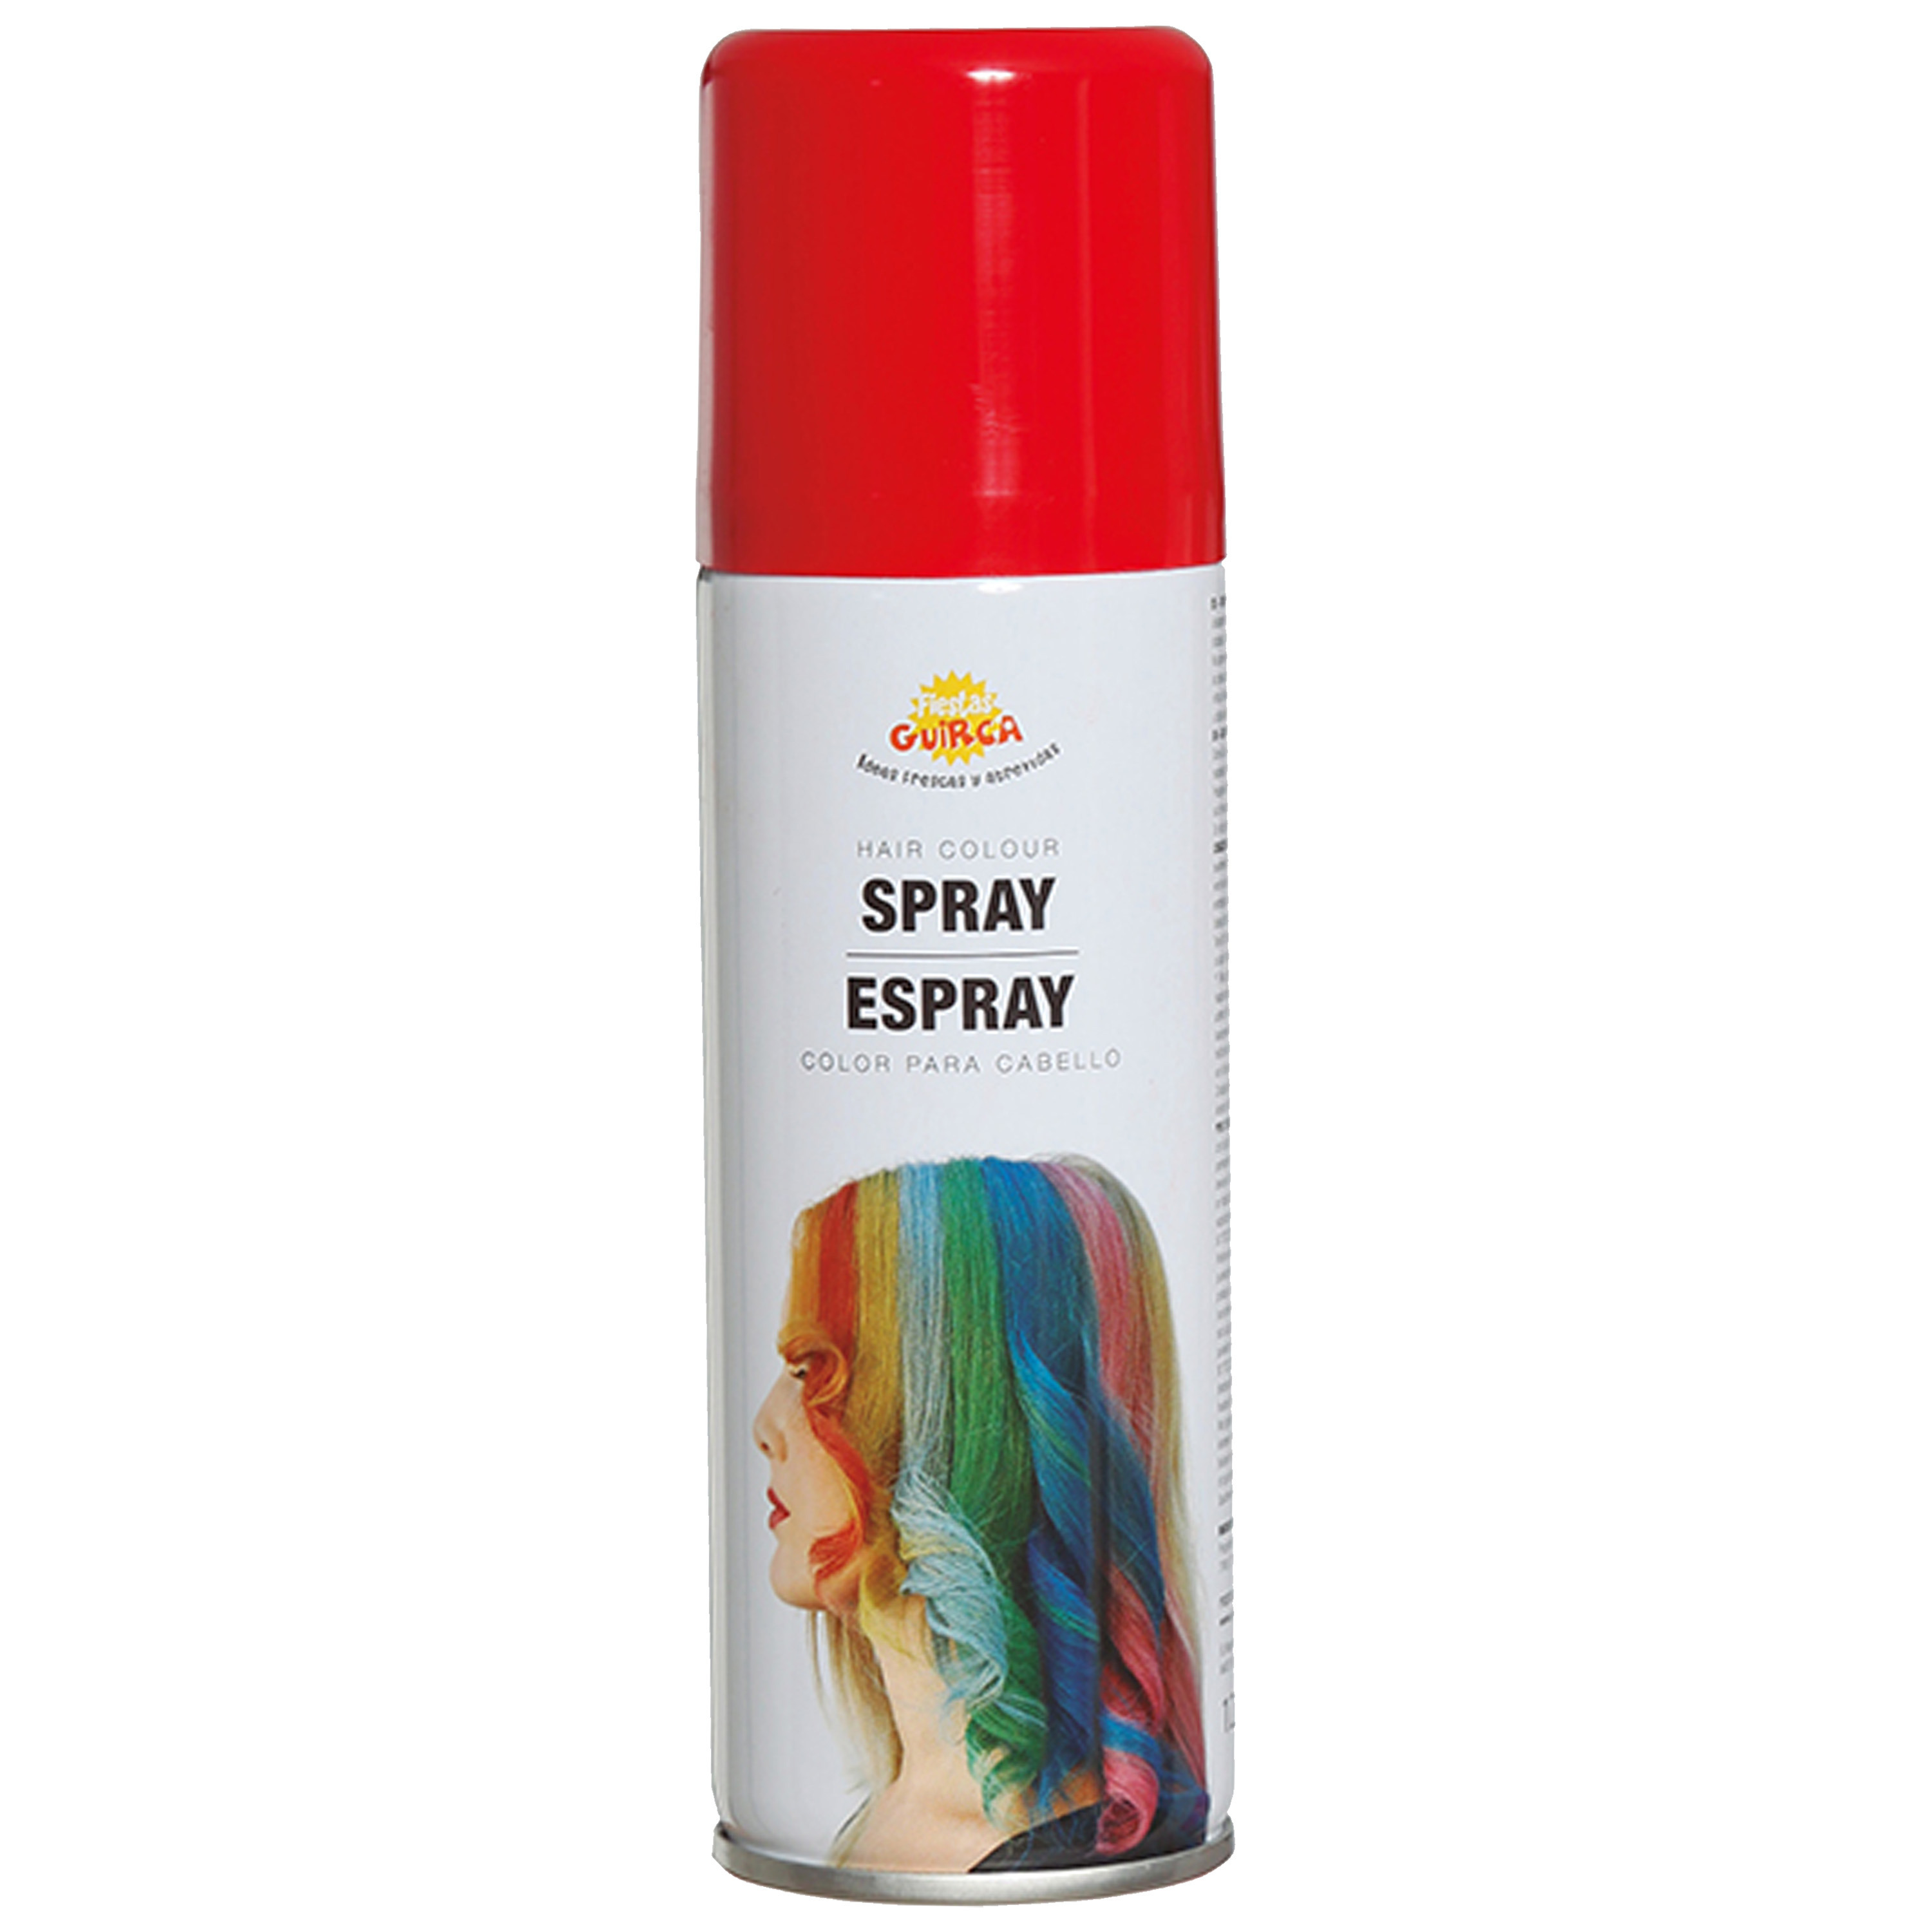 Afbeelding van Carnaval verkleed haar verf/spray - rood - spuitbus - 125 ml